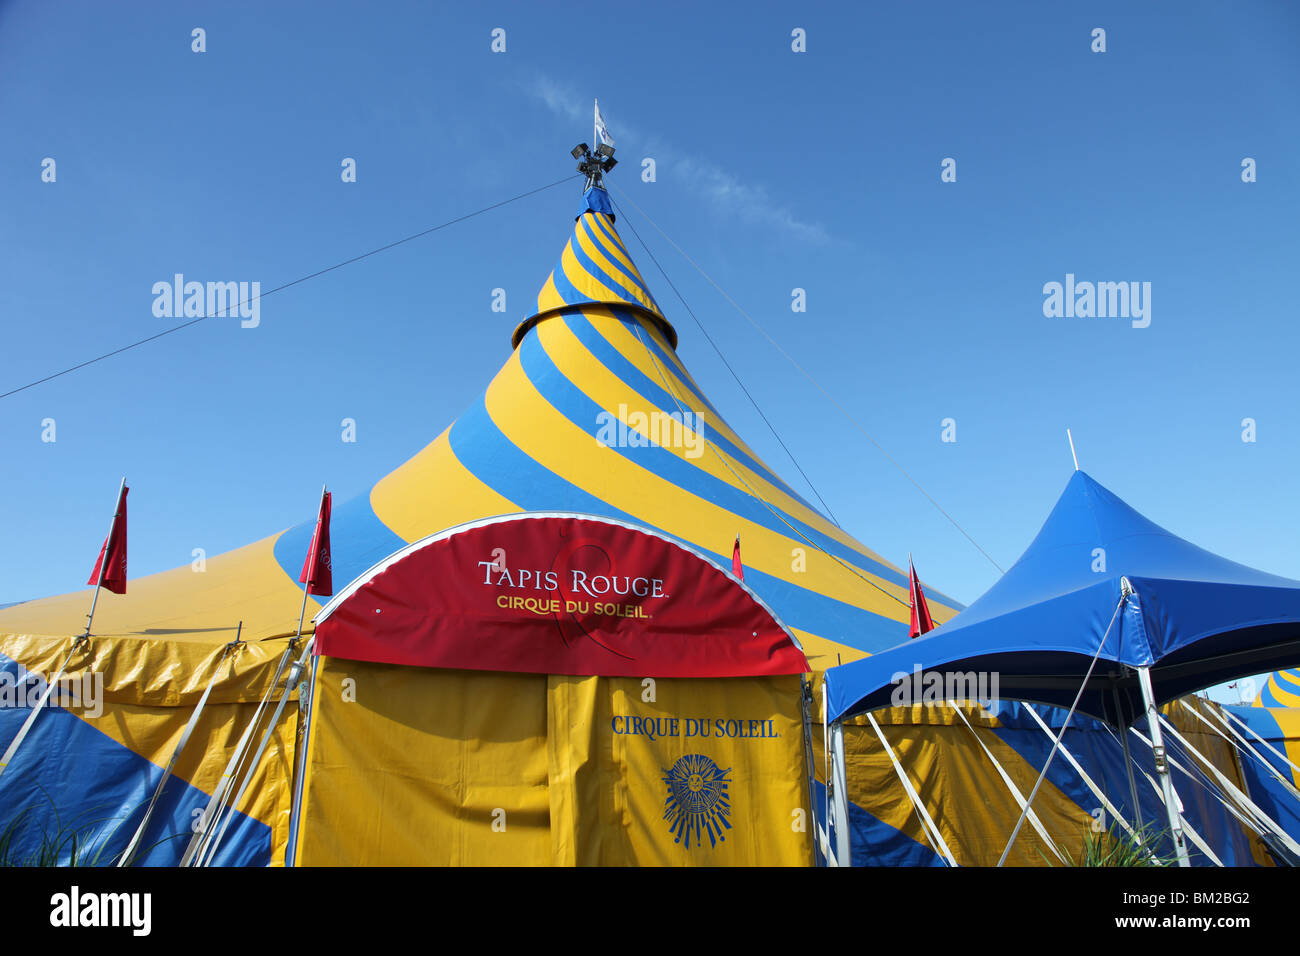 Cirque du Soleil Tapis Rouge (Red Carpet) tent Stock Photo